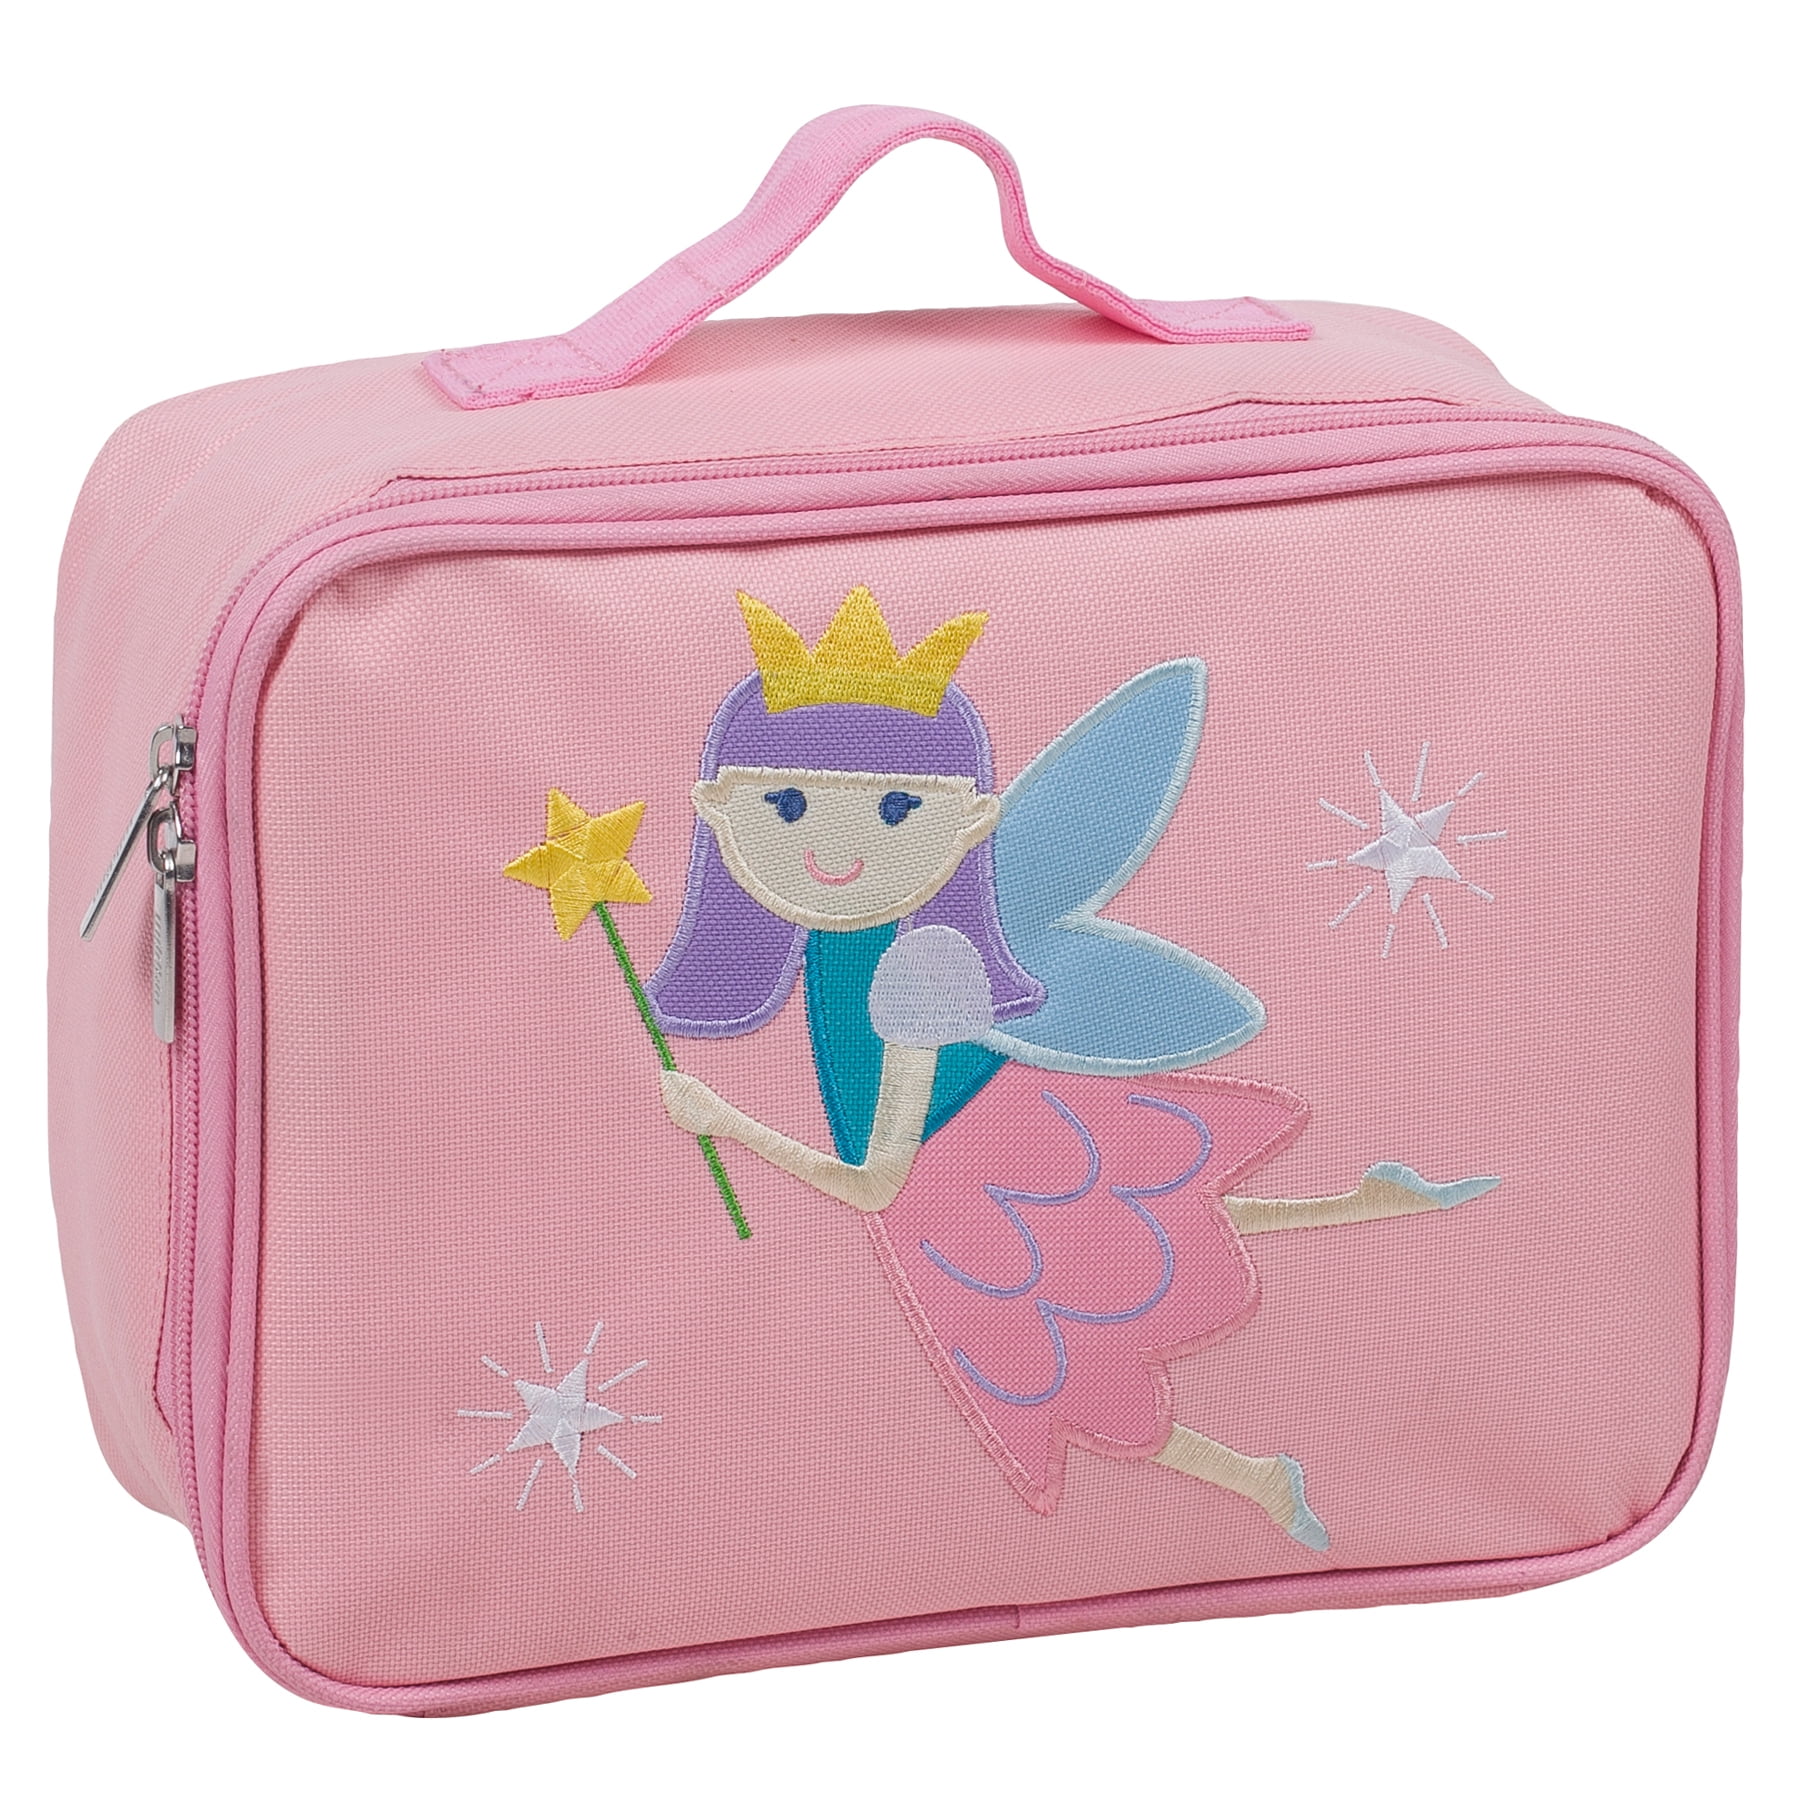 My Favorite Lunchbox Essentials - Happy Home Fairy